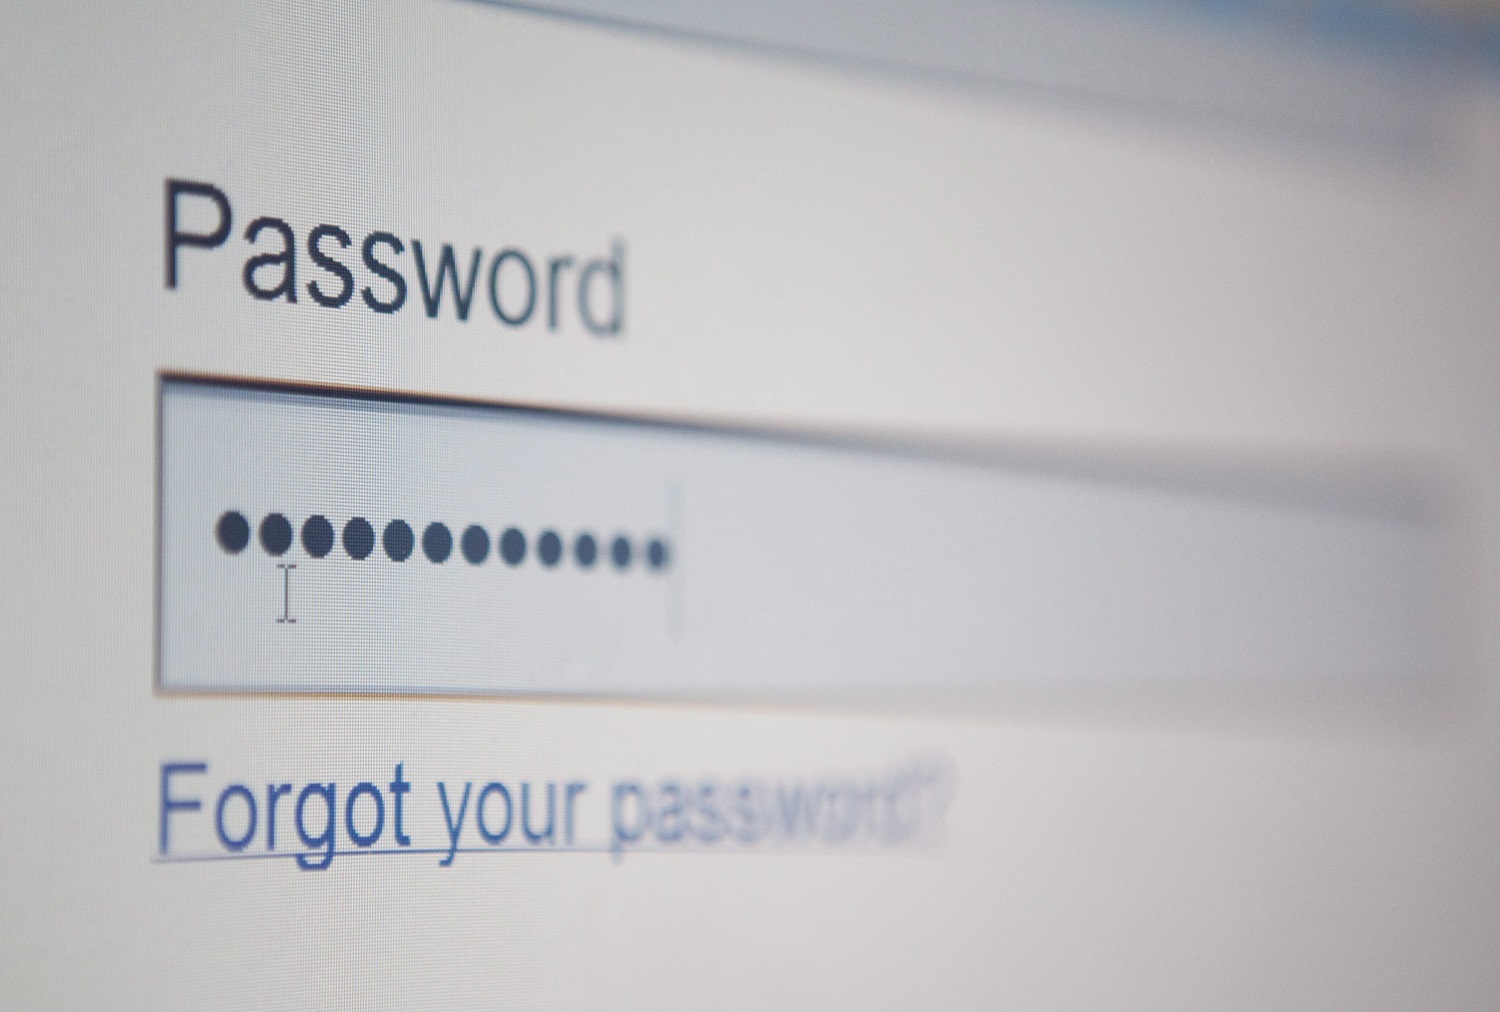 Website password entry screen - 22 Jul 2010